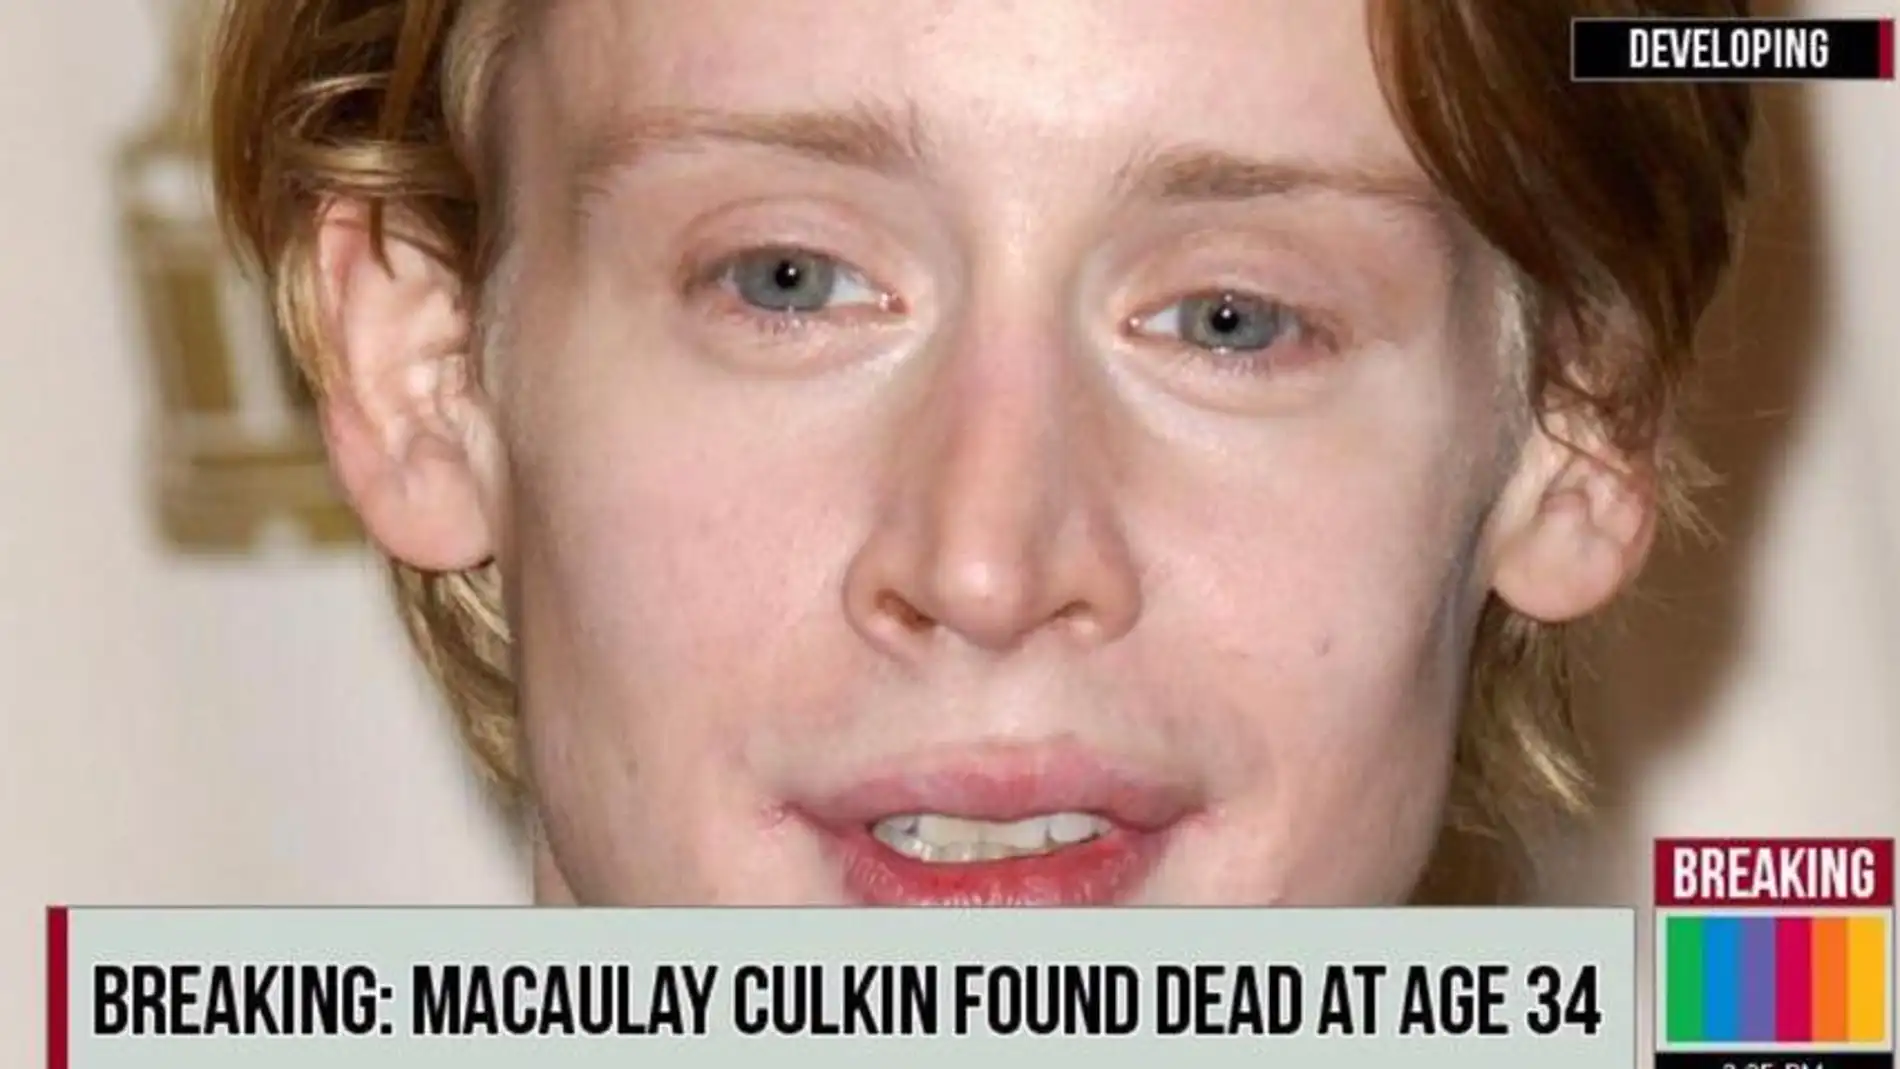 Noticia falsa sobre Macaulay Culkin